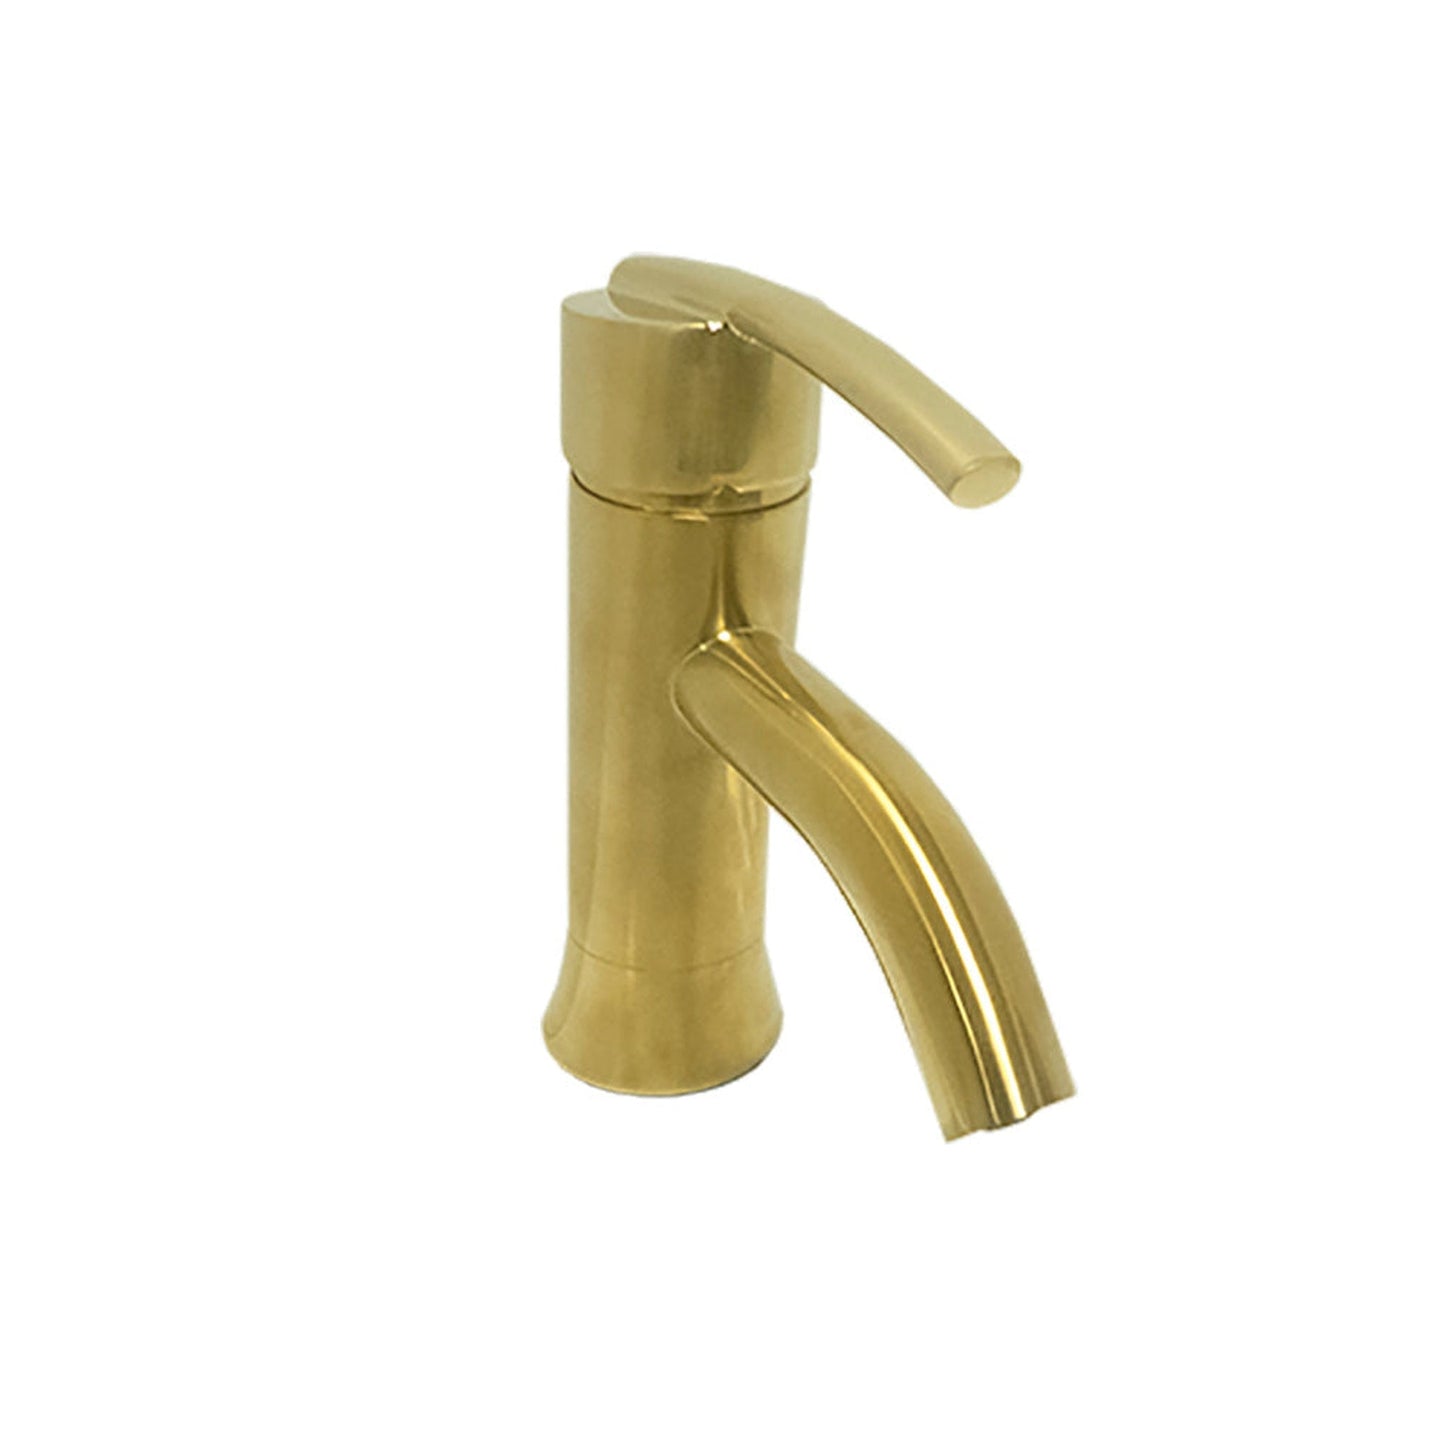 Bellaterra Home Refina 7" Single-Hole and Single Handle Gold Bathroom Faucet